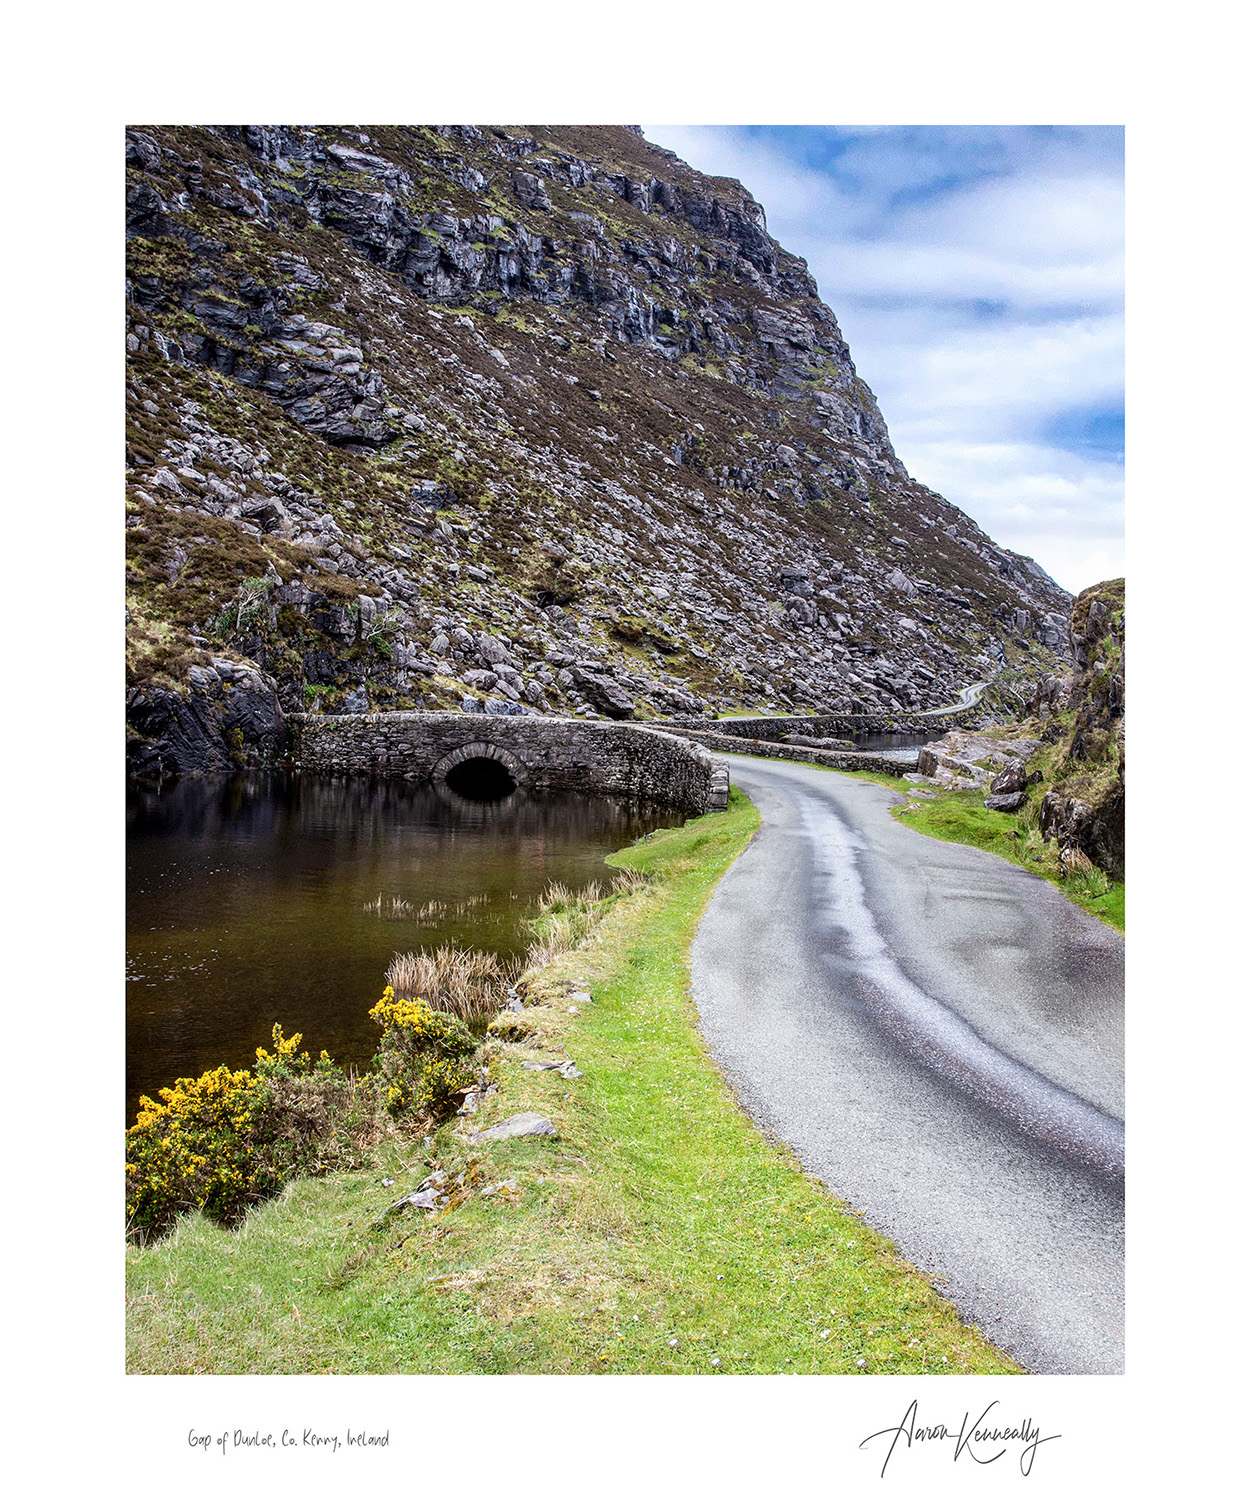 Gap of Dunloe, Co. Kerry, Ireland